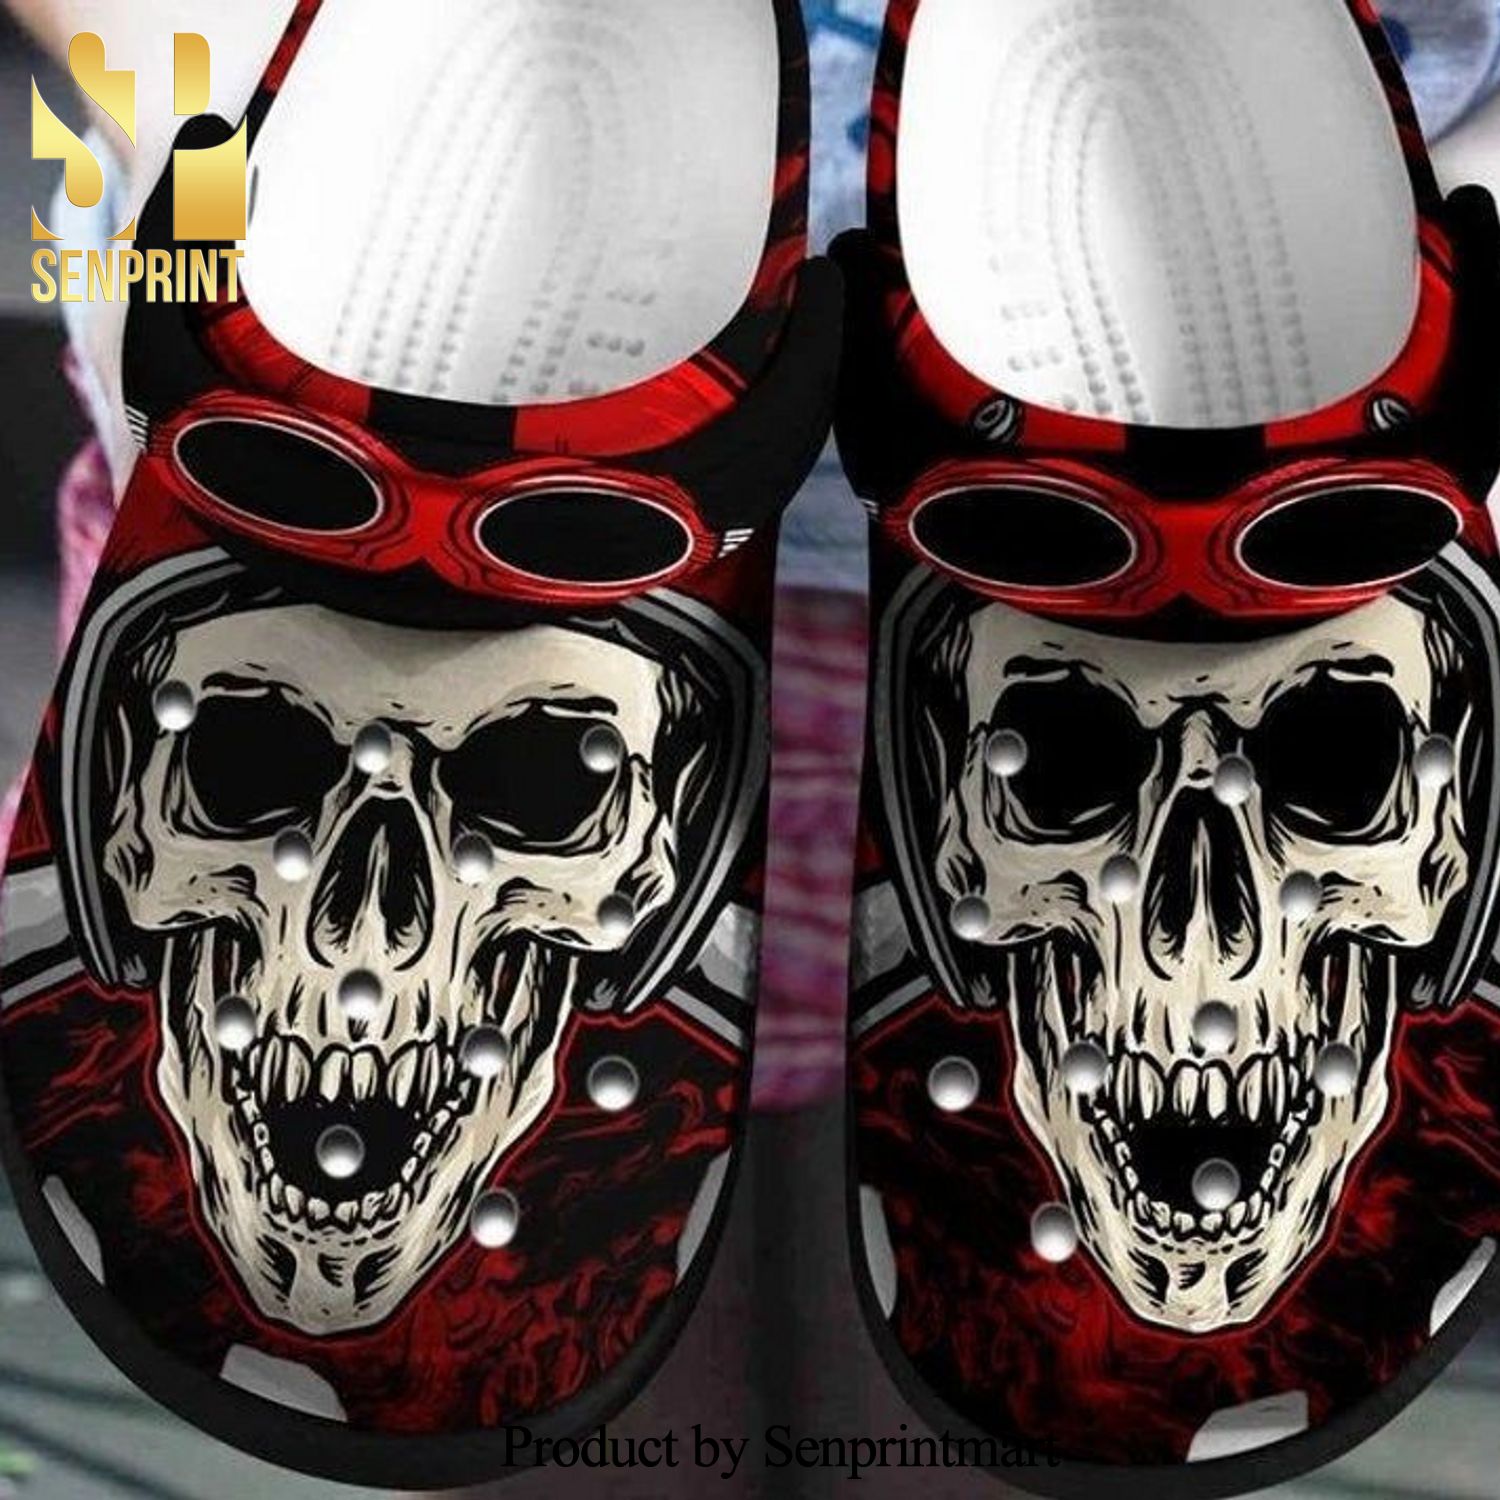 Skulls Skull Art Croc Motorcycling Crocs Crocband Clog